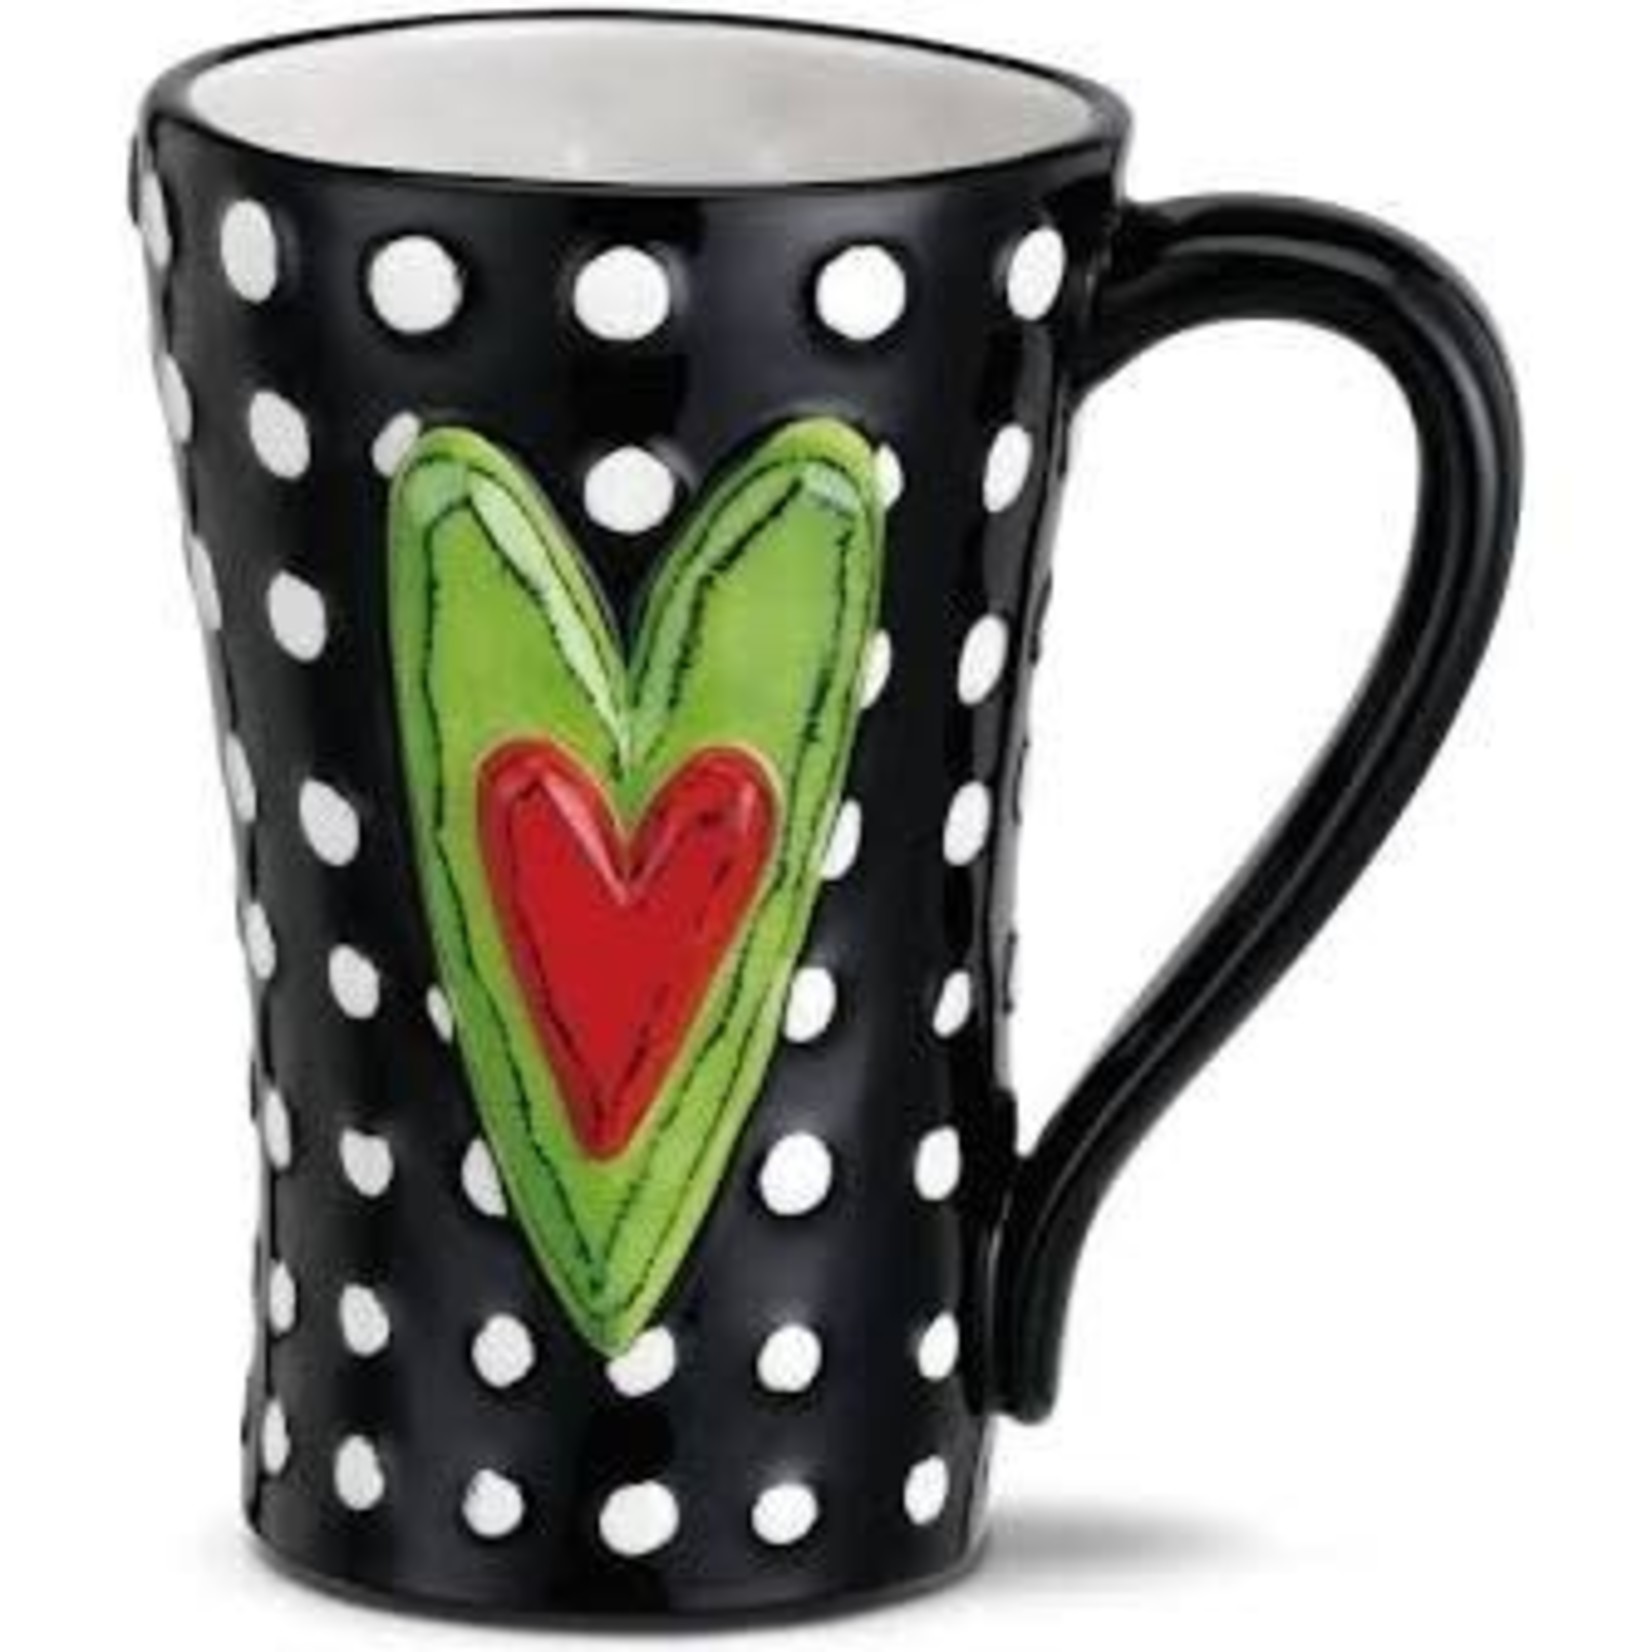 Demdaco Hearfelt Home Collection Mug - Green Heart